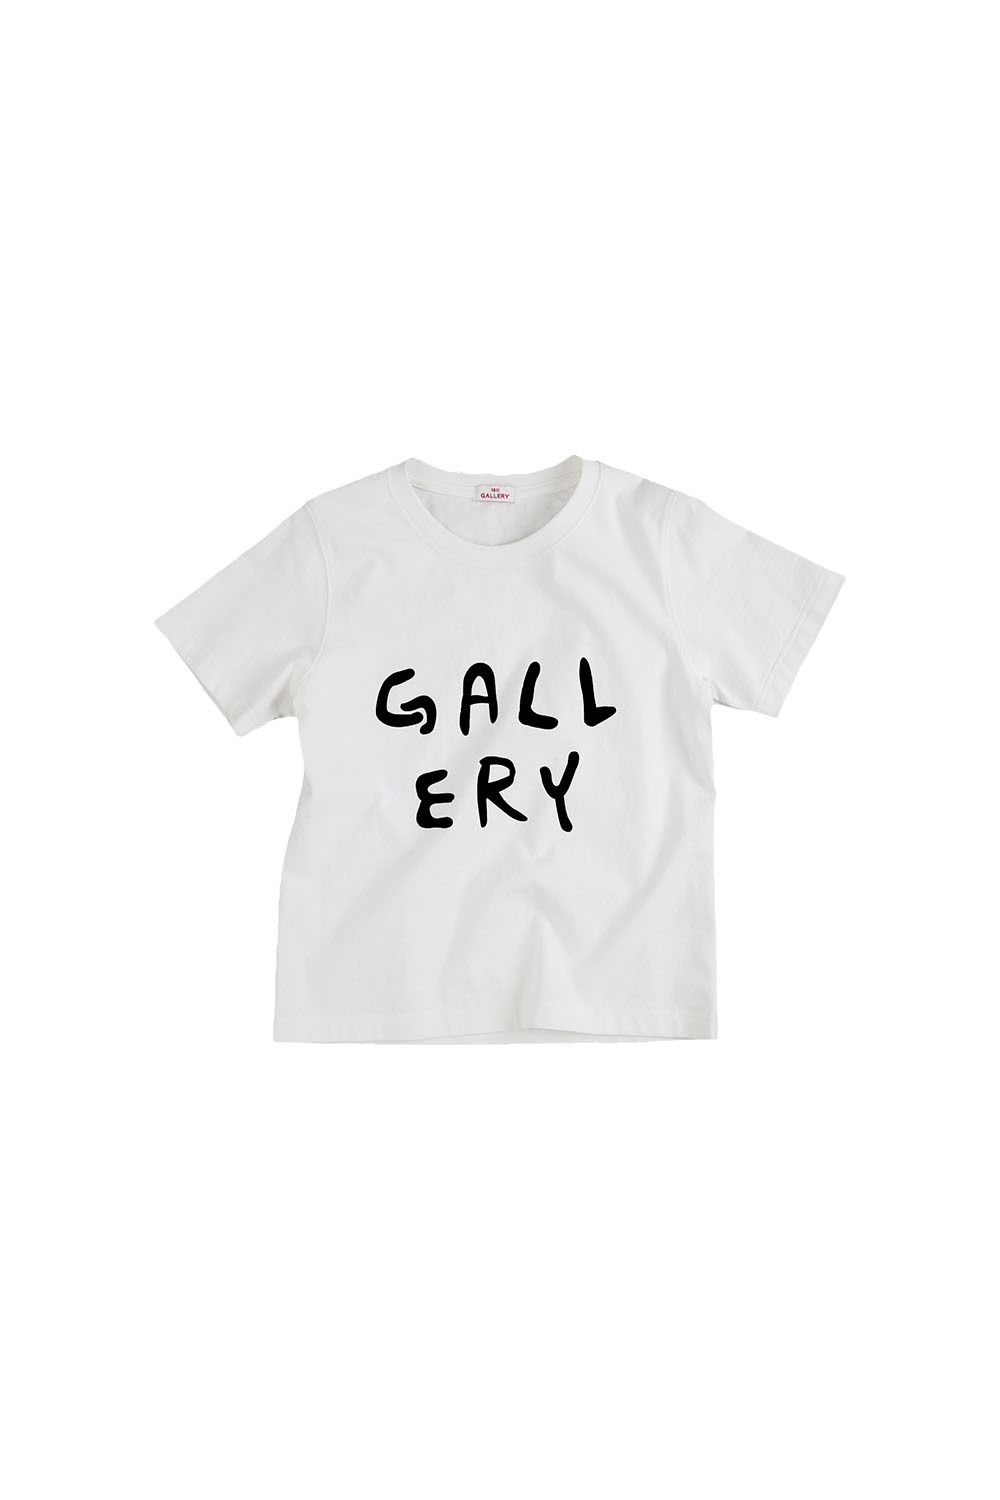 Gallery Baby T-shirt